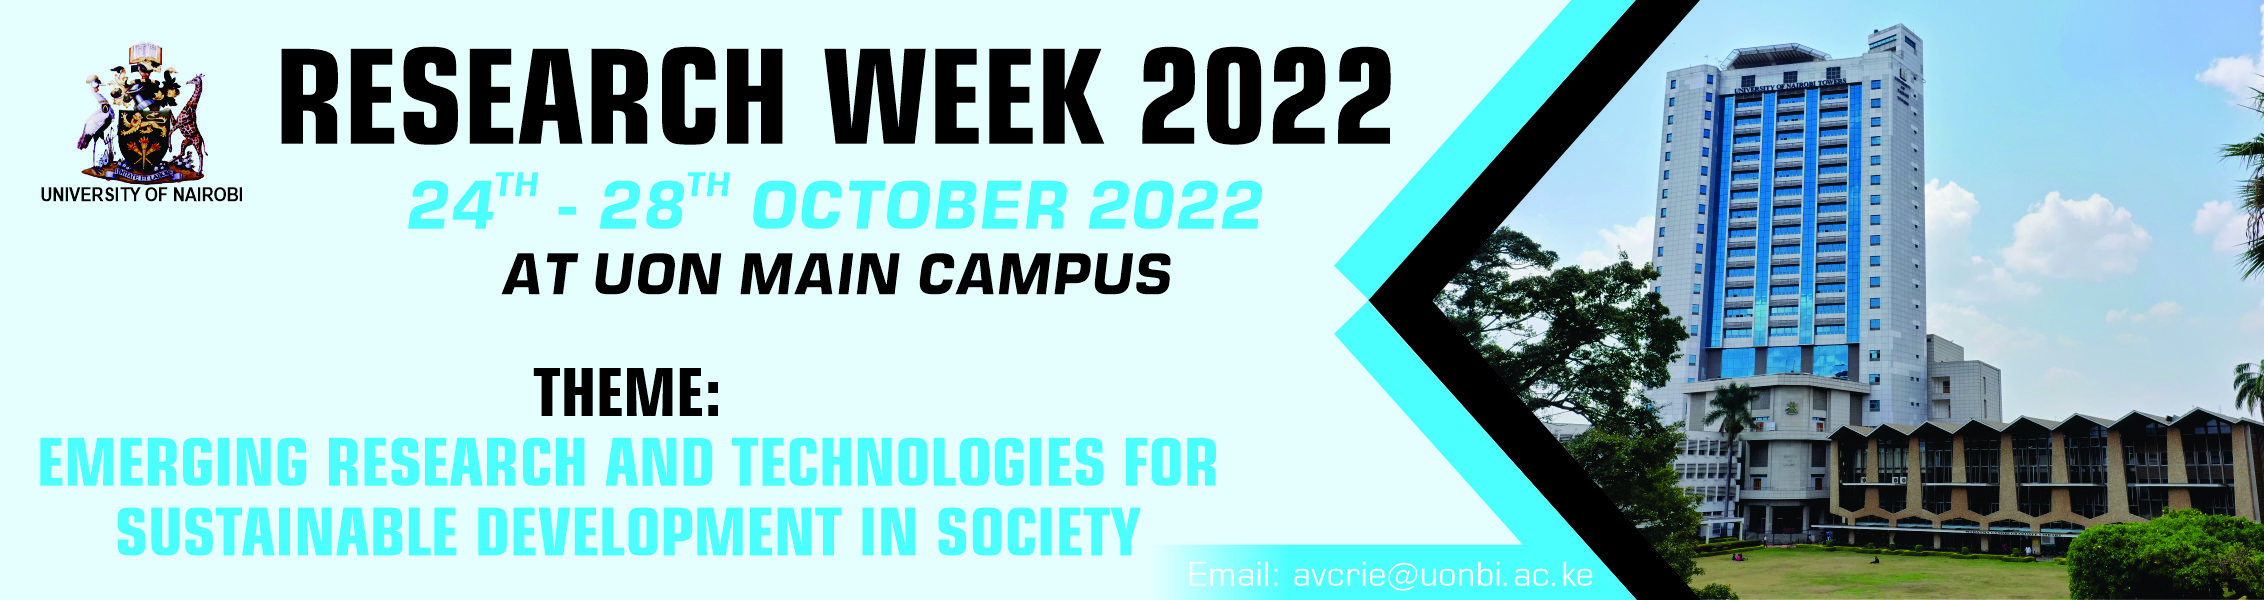 Research Week 2022 Banner (1).jpg